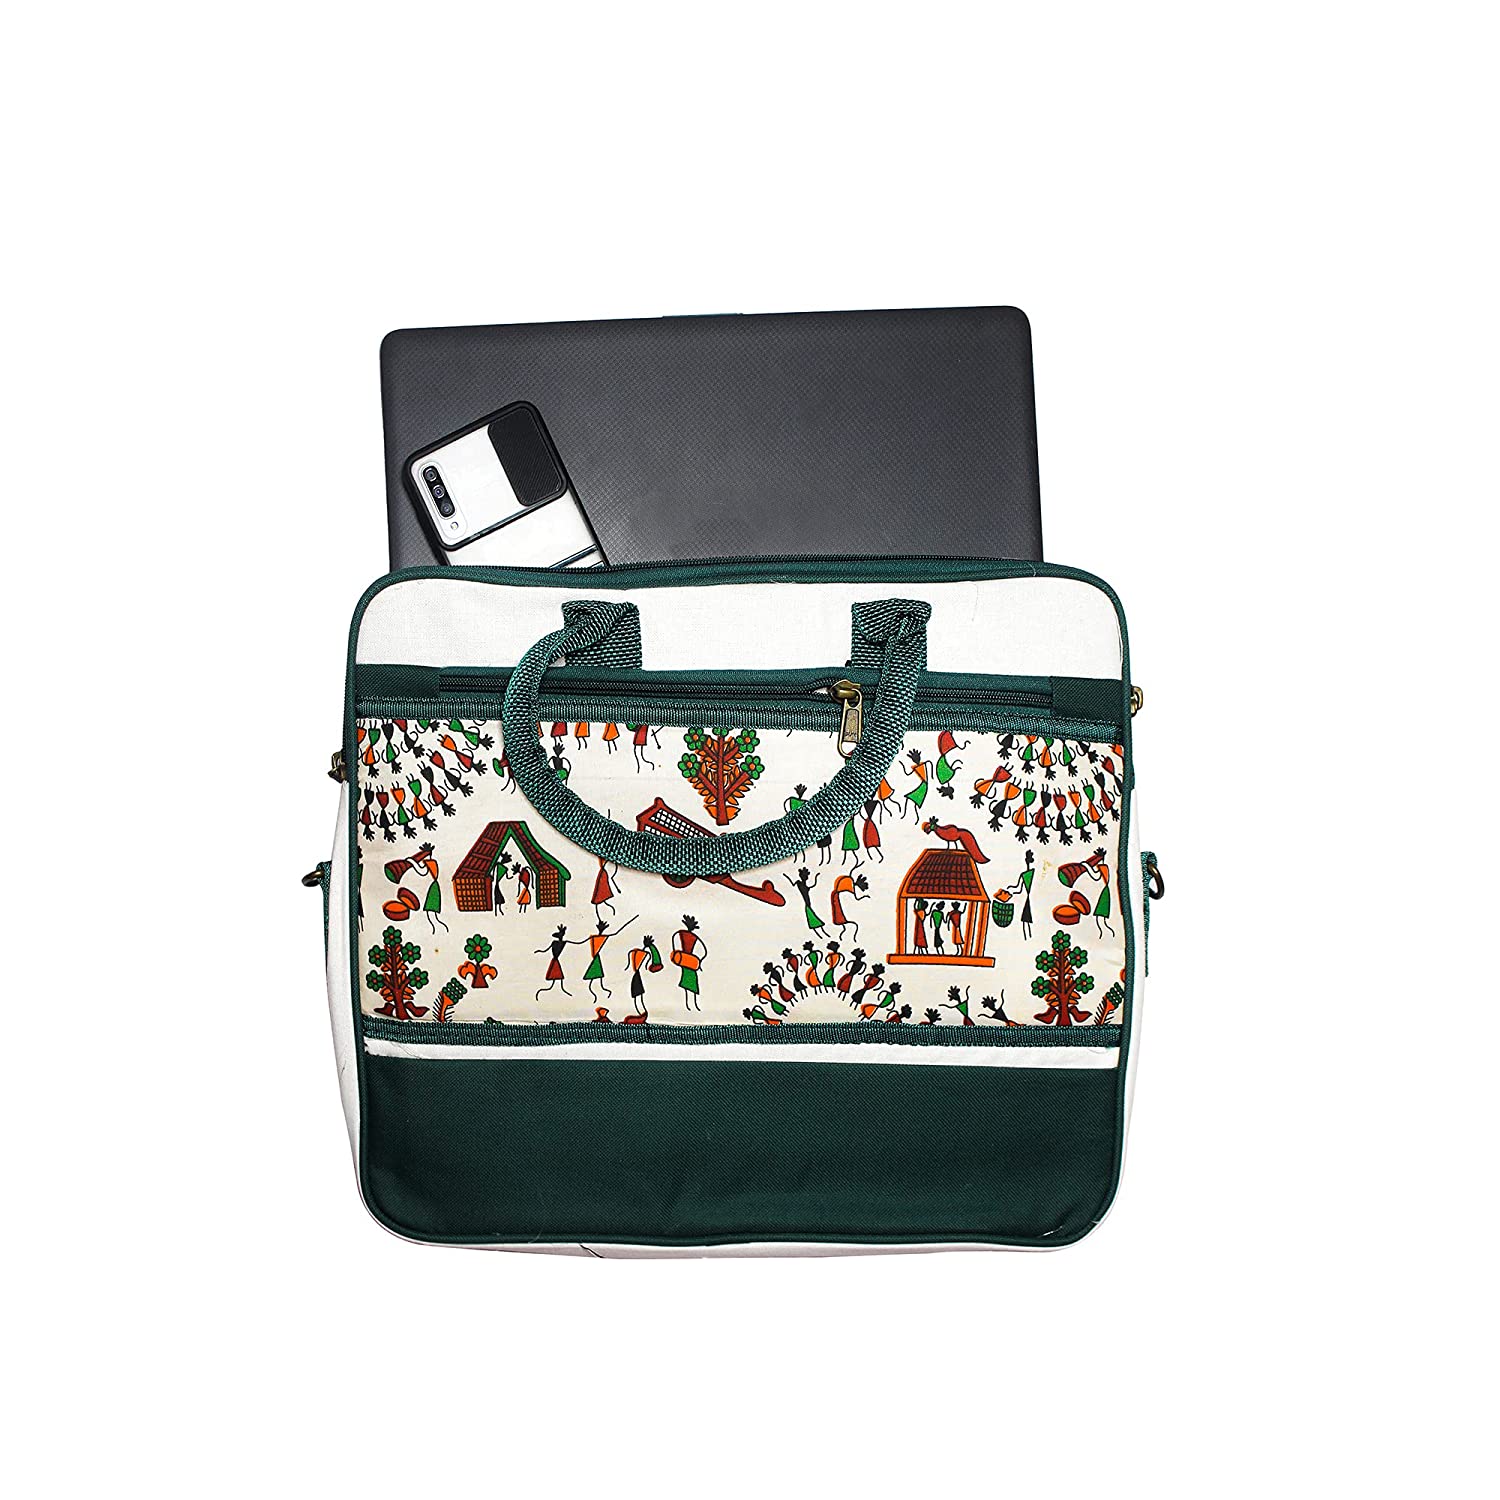 Women's Hand Laptop Bag With Multi-pocket & Detachable strap Best for women